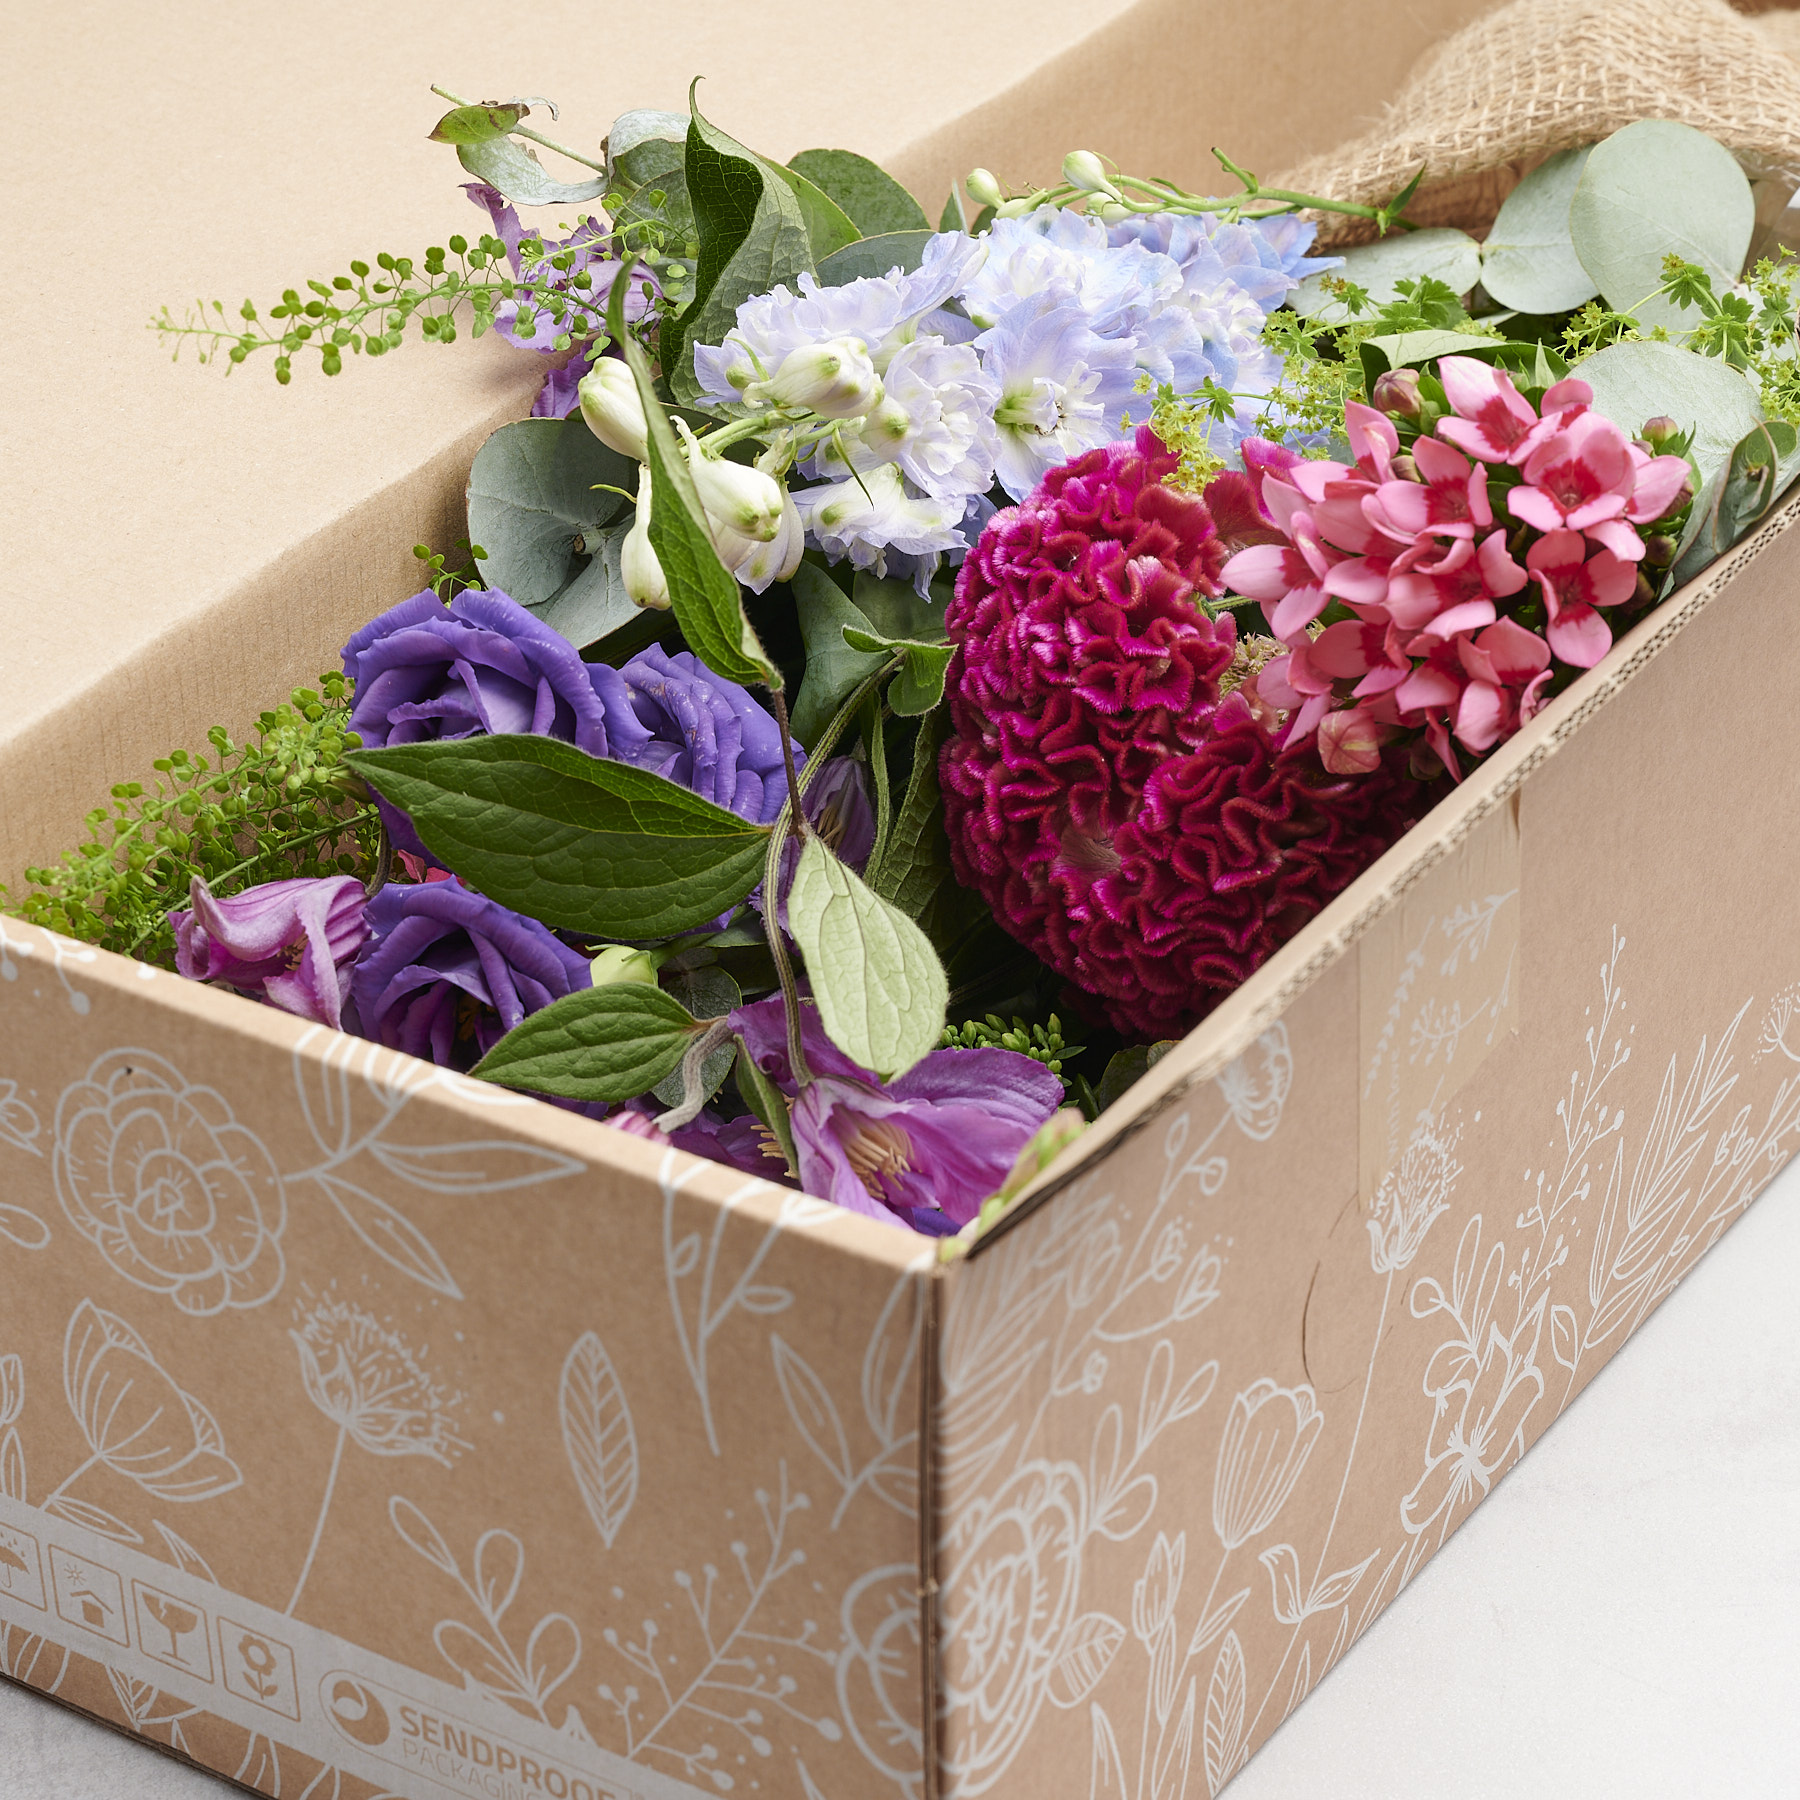 Flower Subscription Boxes - FAQs